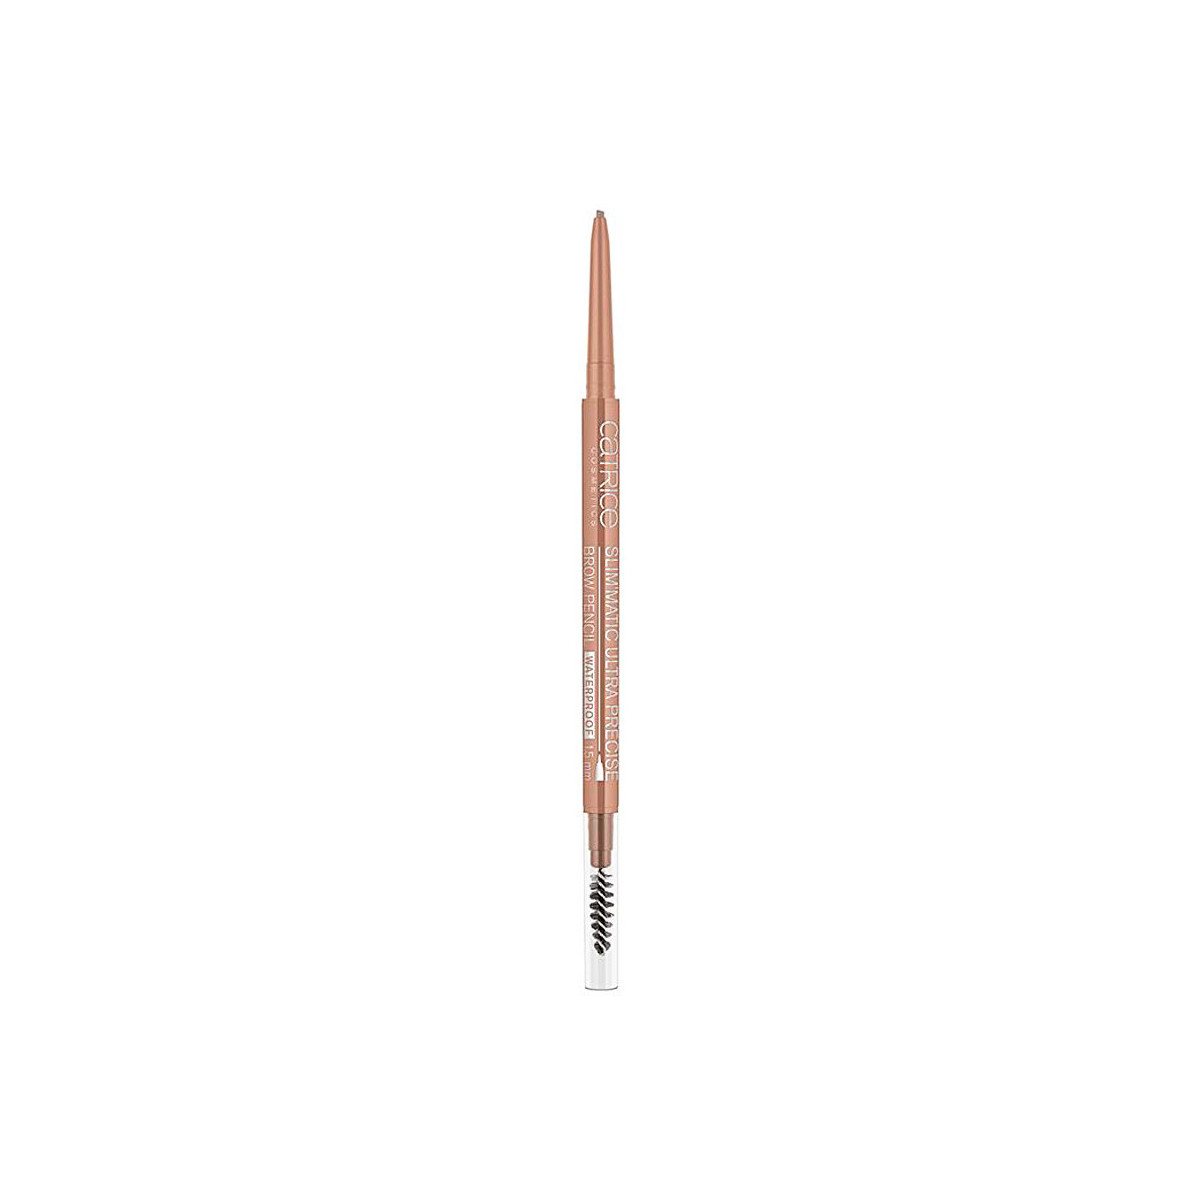 Beauté Femme The North Face Slim'Matic Ultra Precise Brow Pencil Wp 020-medium 